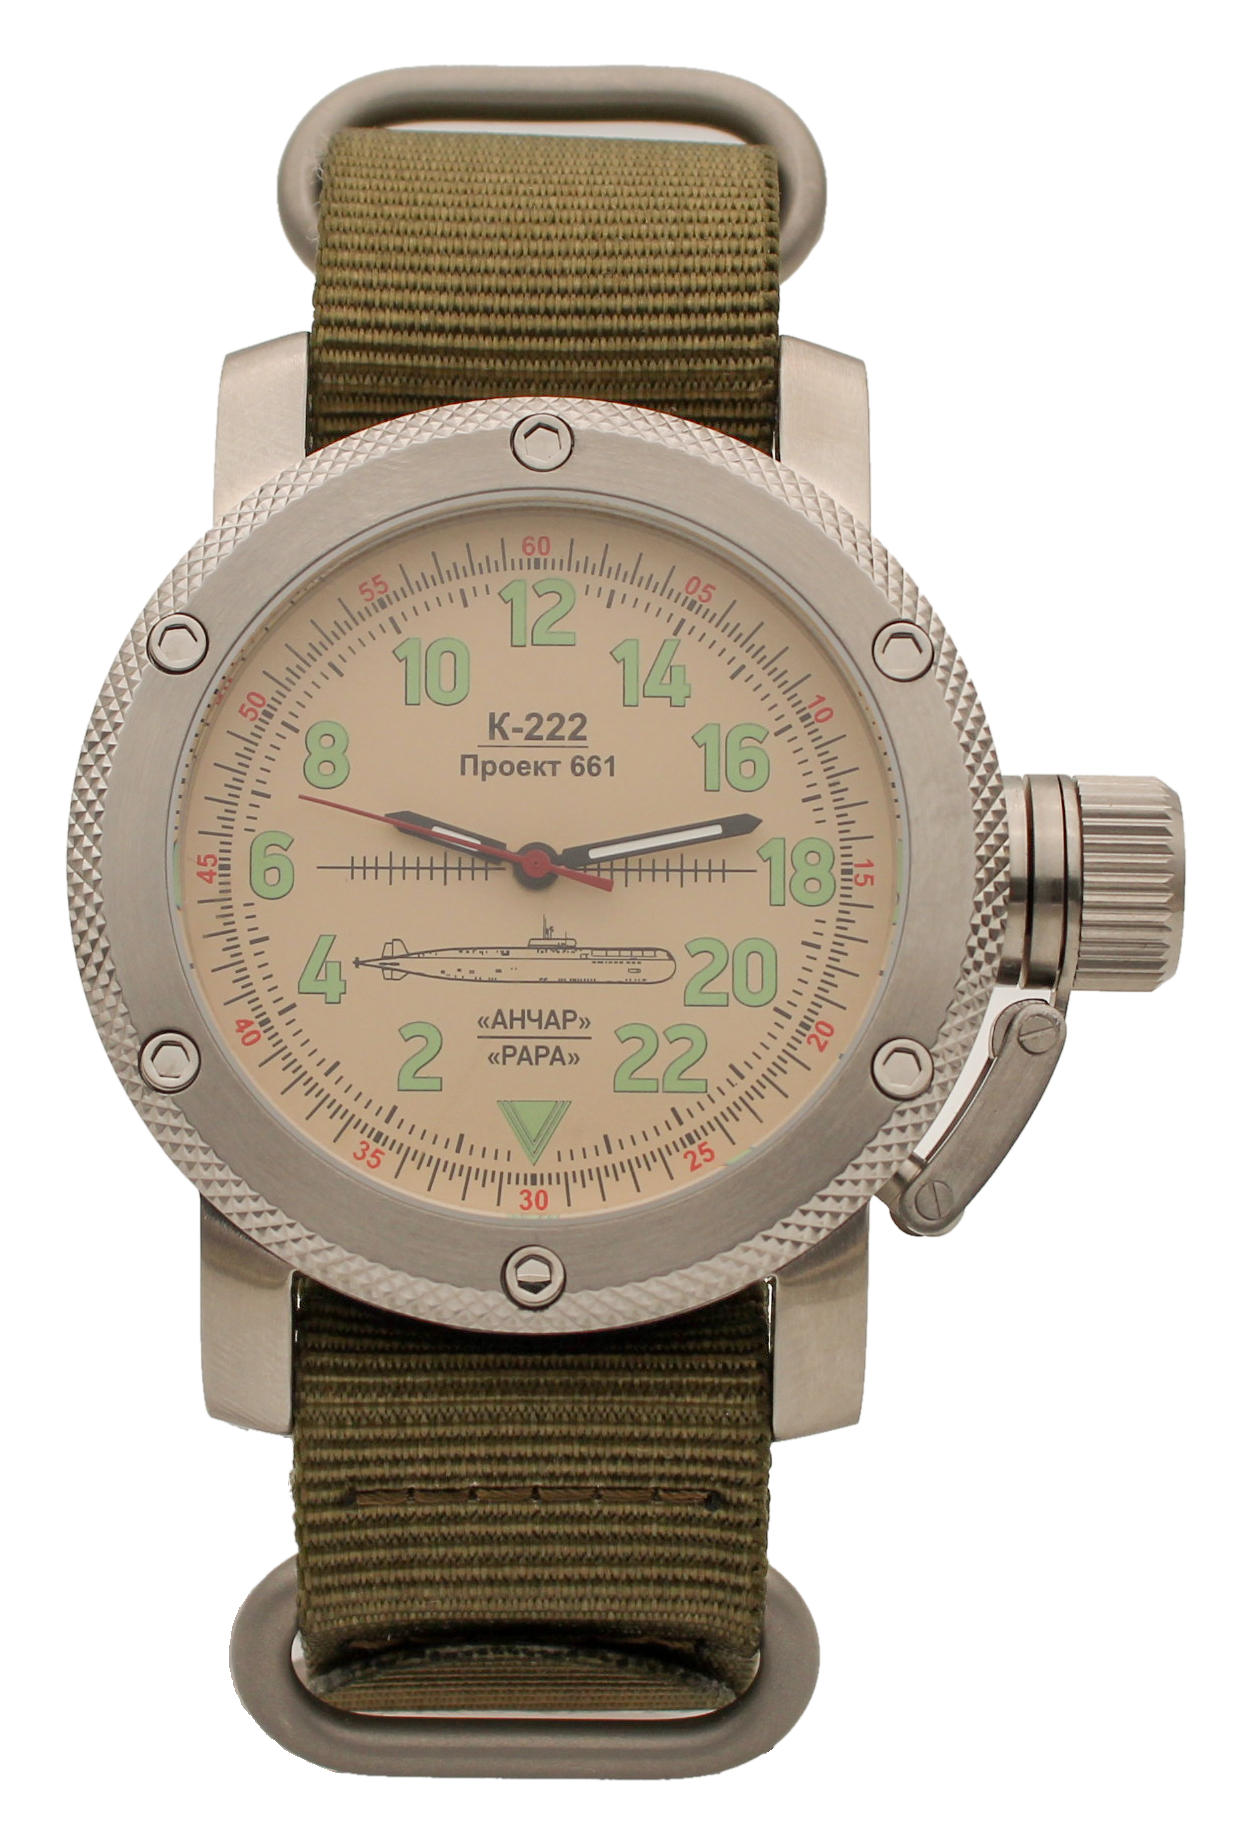 Наручные часы мужские Watch Triumph К-222 / Анчар (Papa)